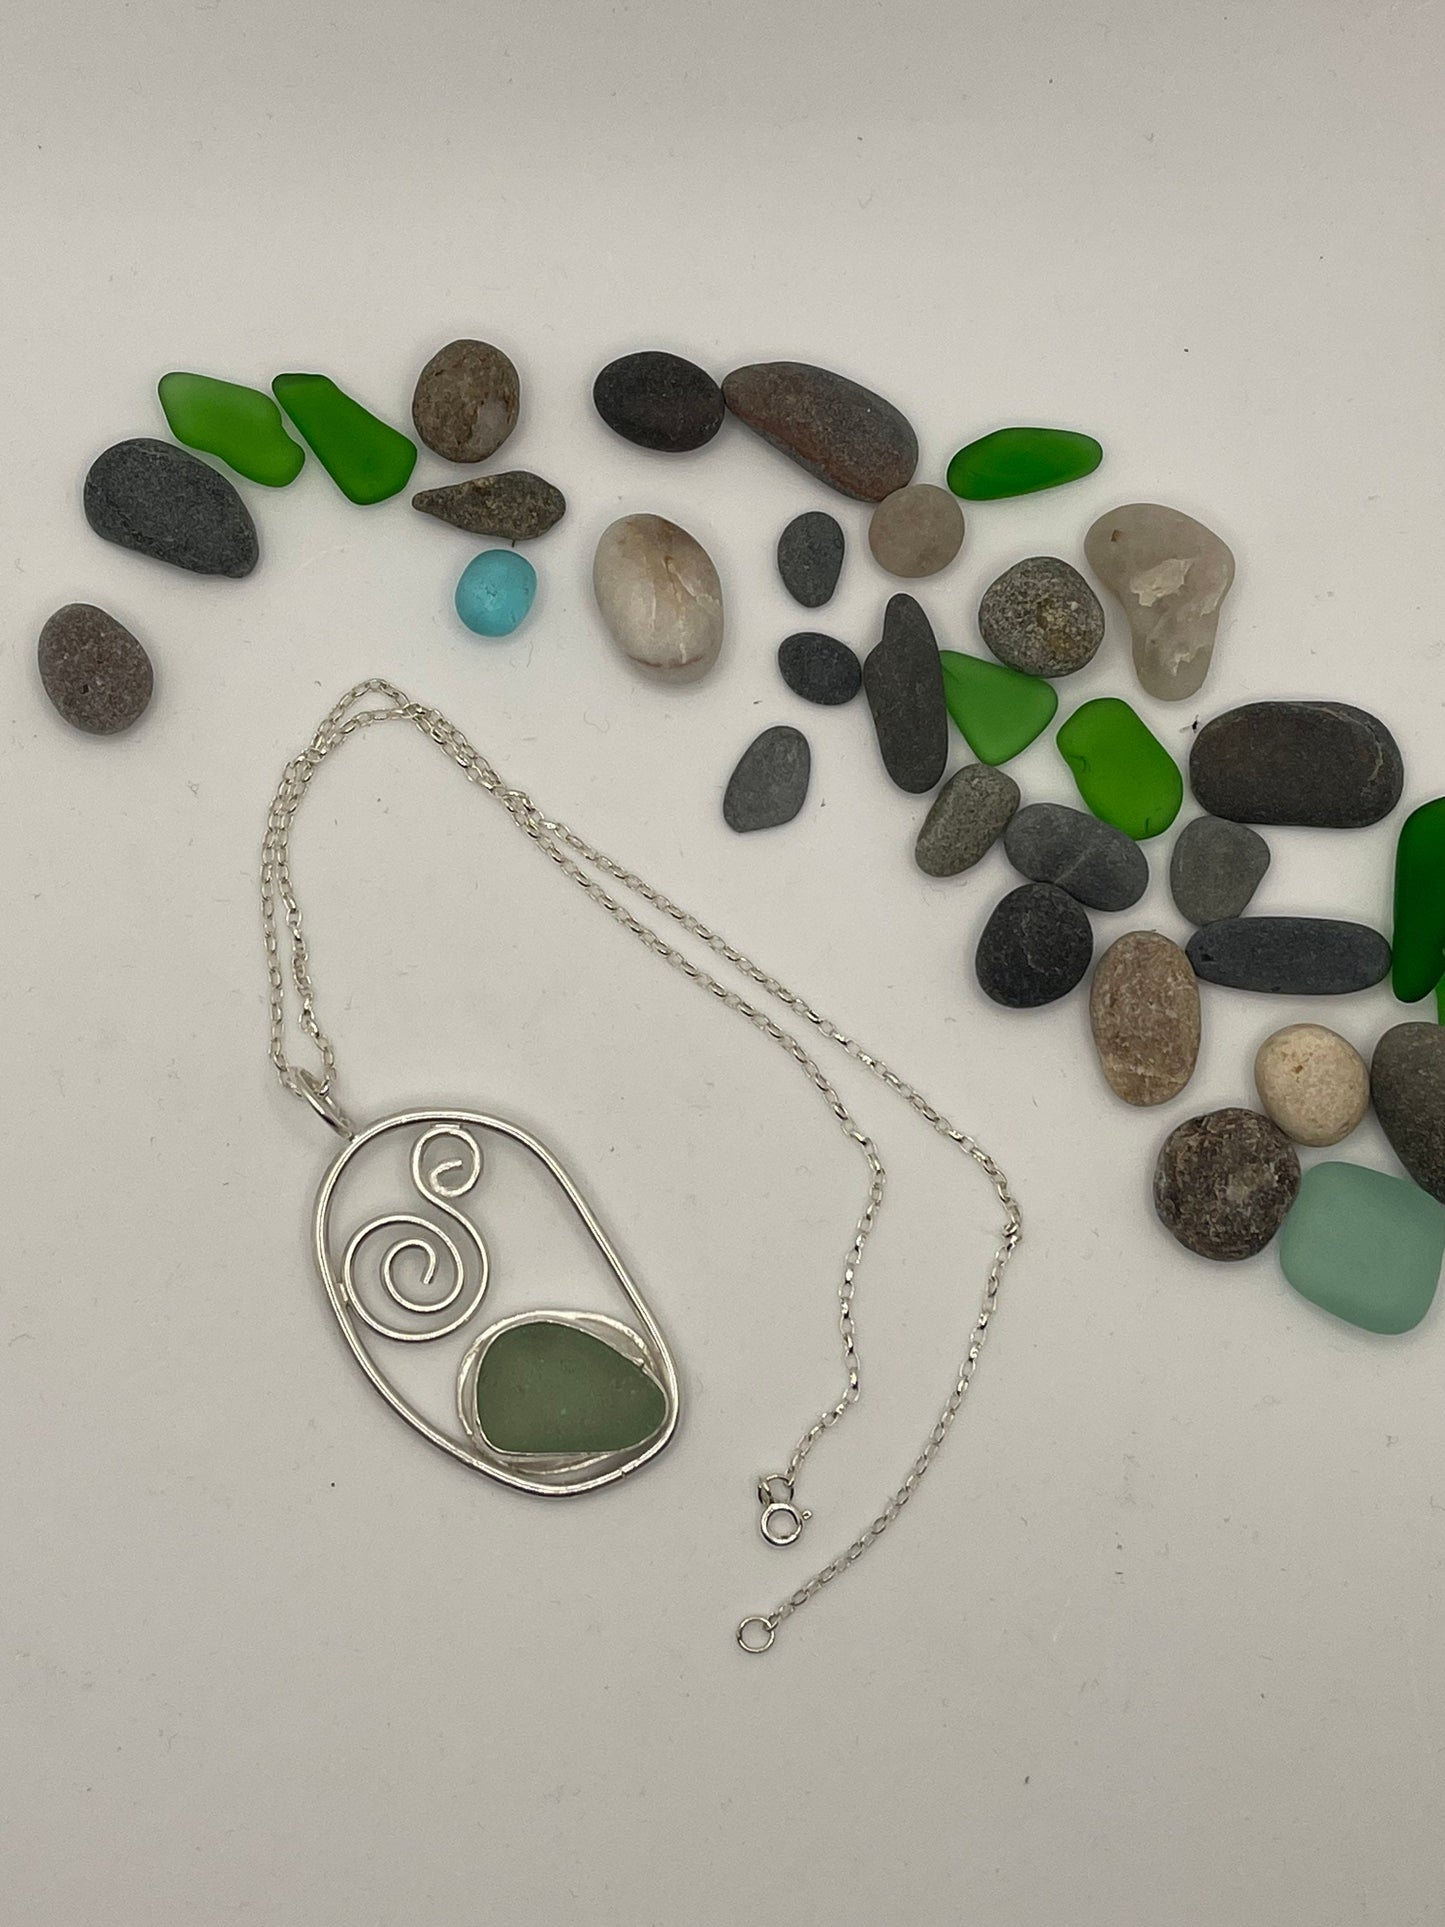 Sterling silver sea glass pendant necklace, handmade sea glass pendant, sea glass, sea glass jewellery, made in Scotland,